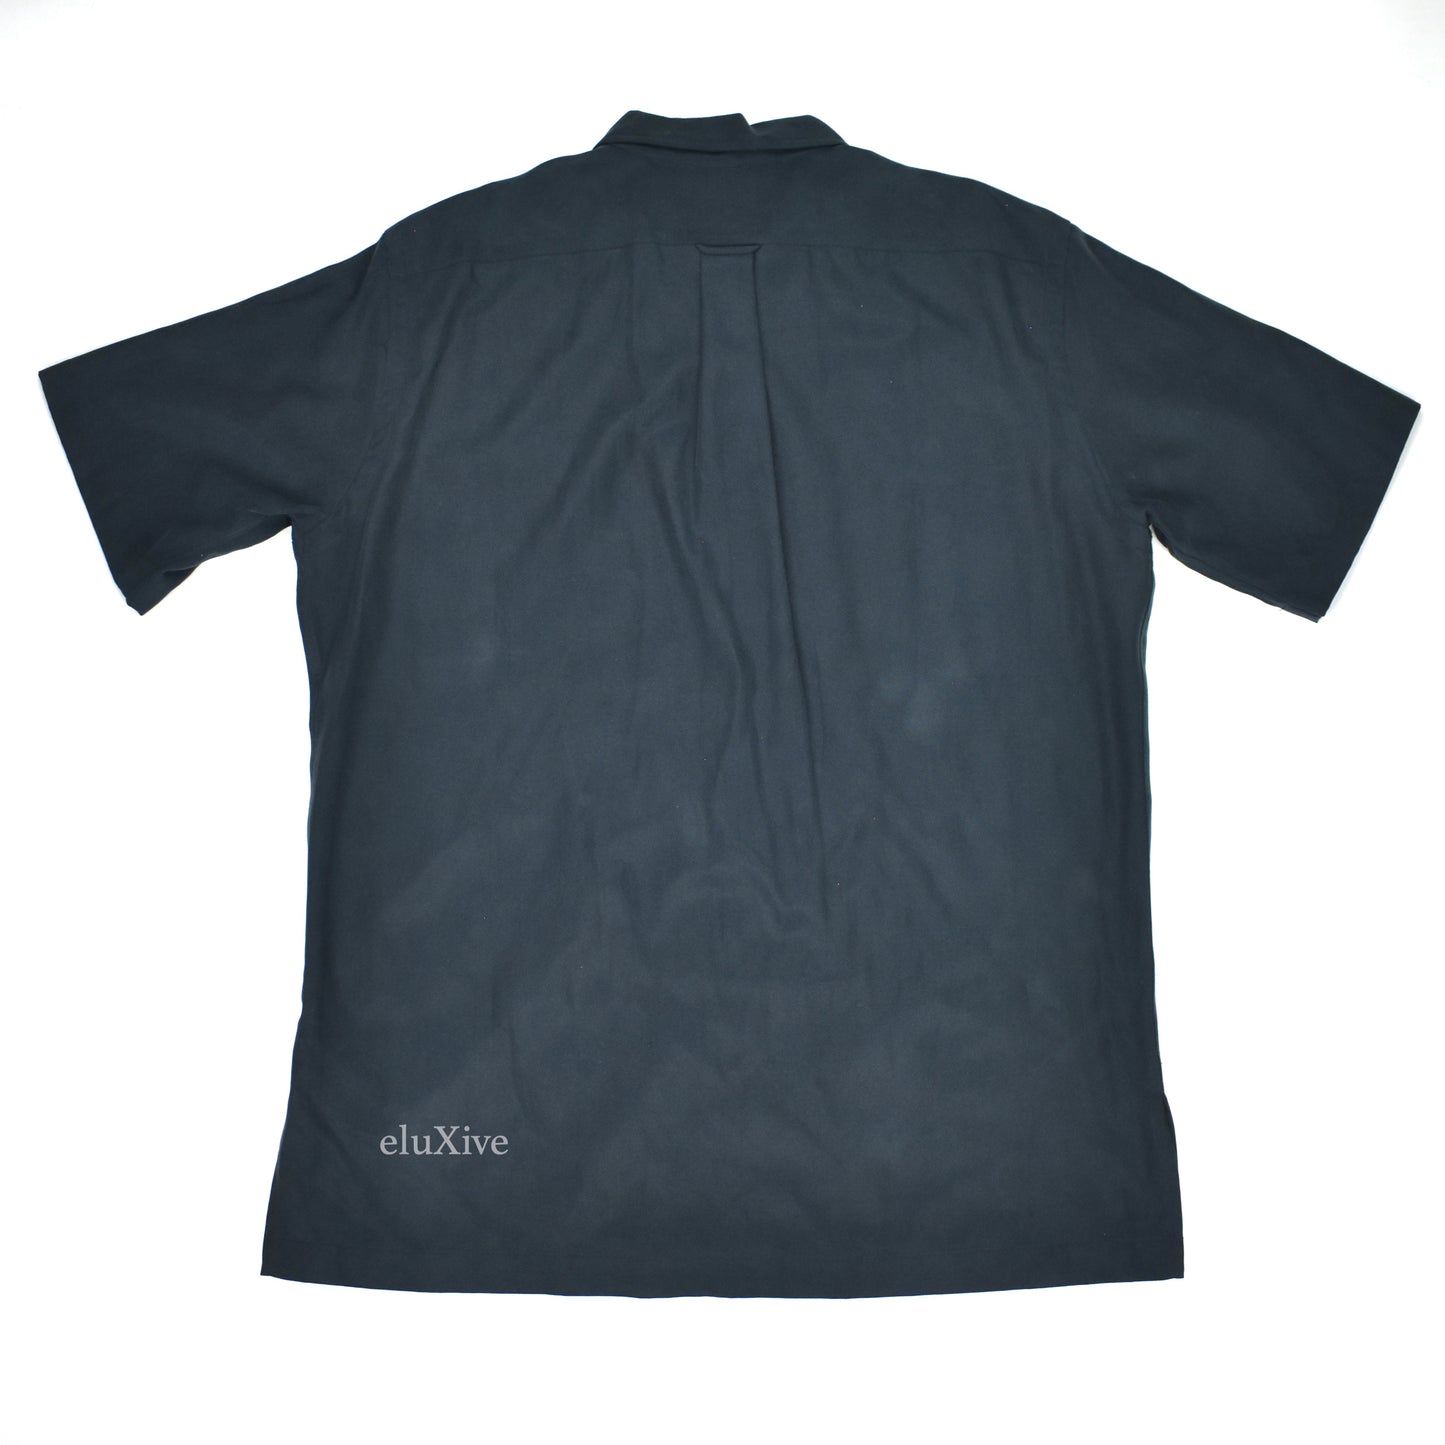 Polo Ralph Lauren - Vintage Black Silk Blend Caldwell Shirt